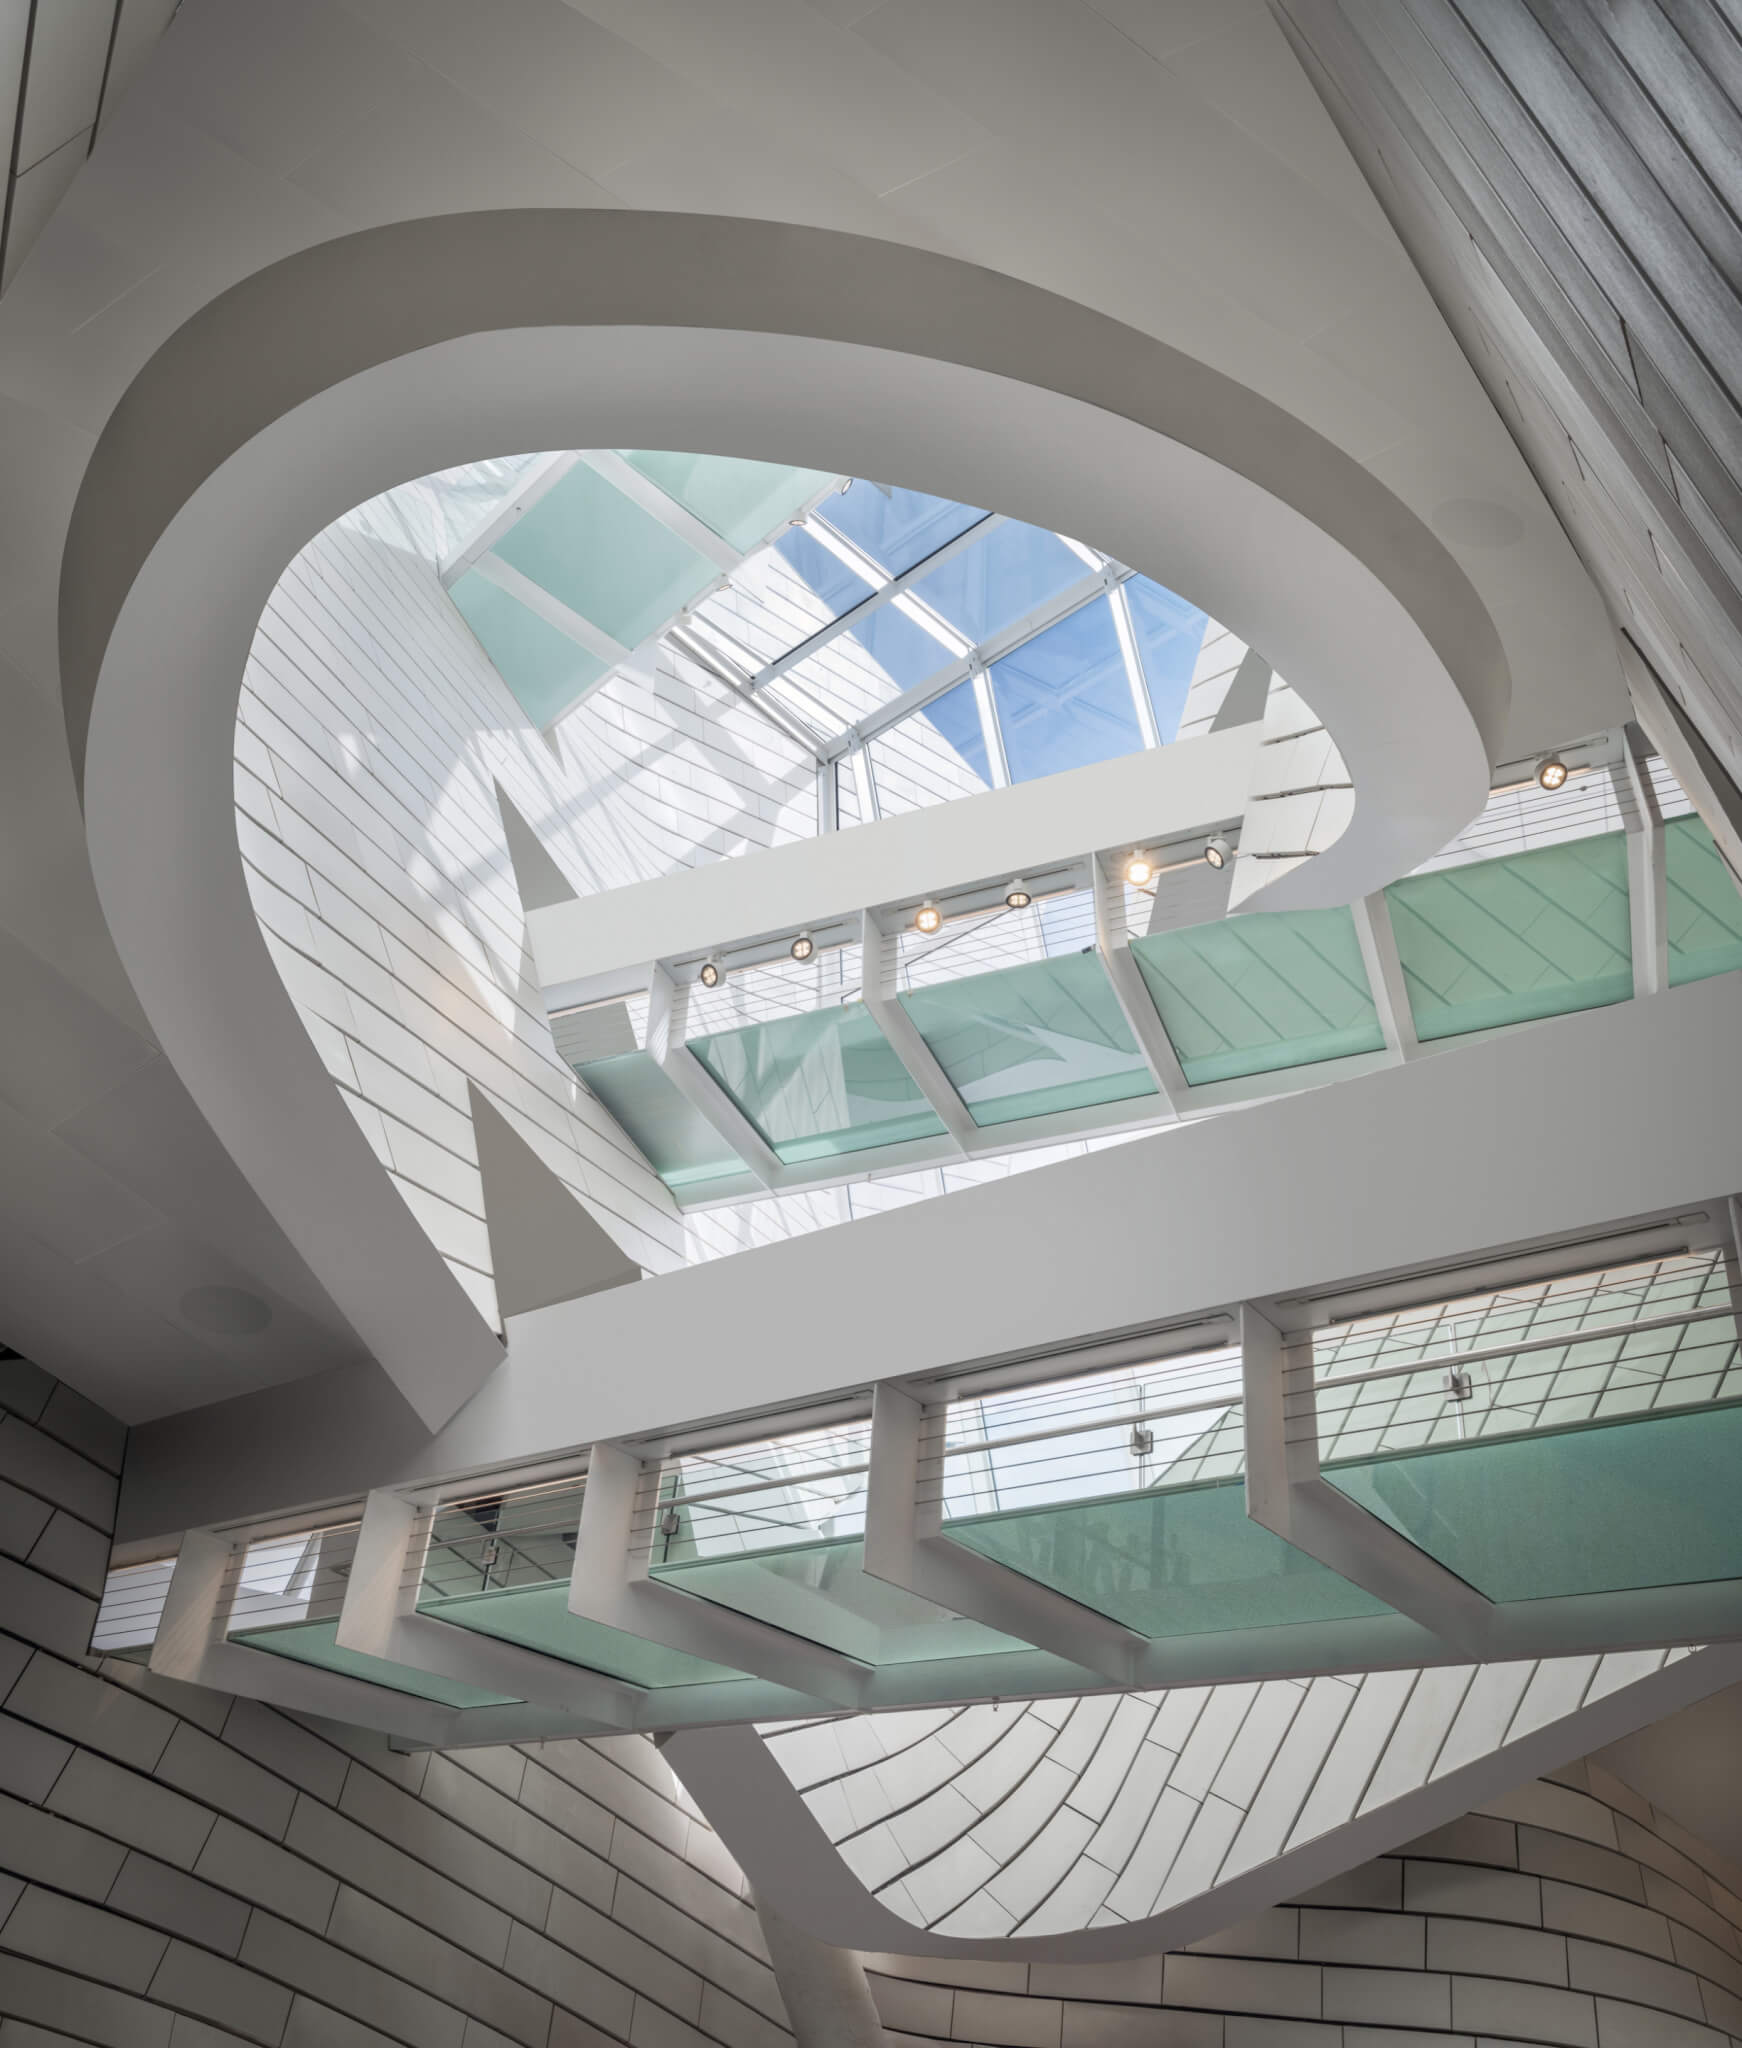 glass and steel bridges crossing through a soaring atrium